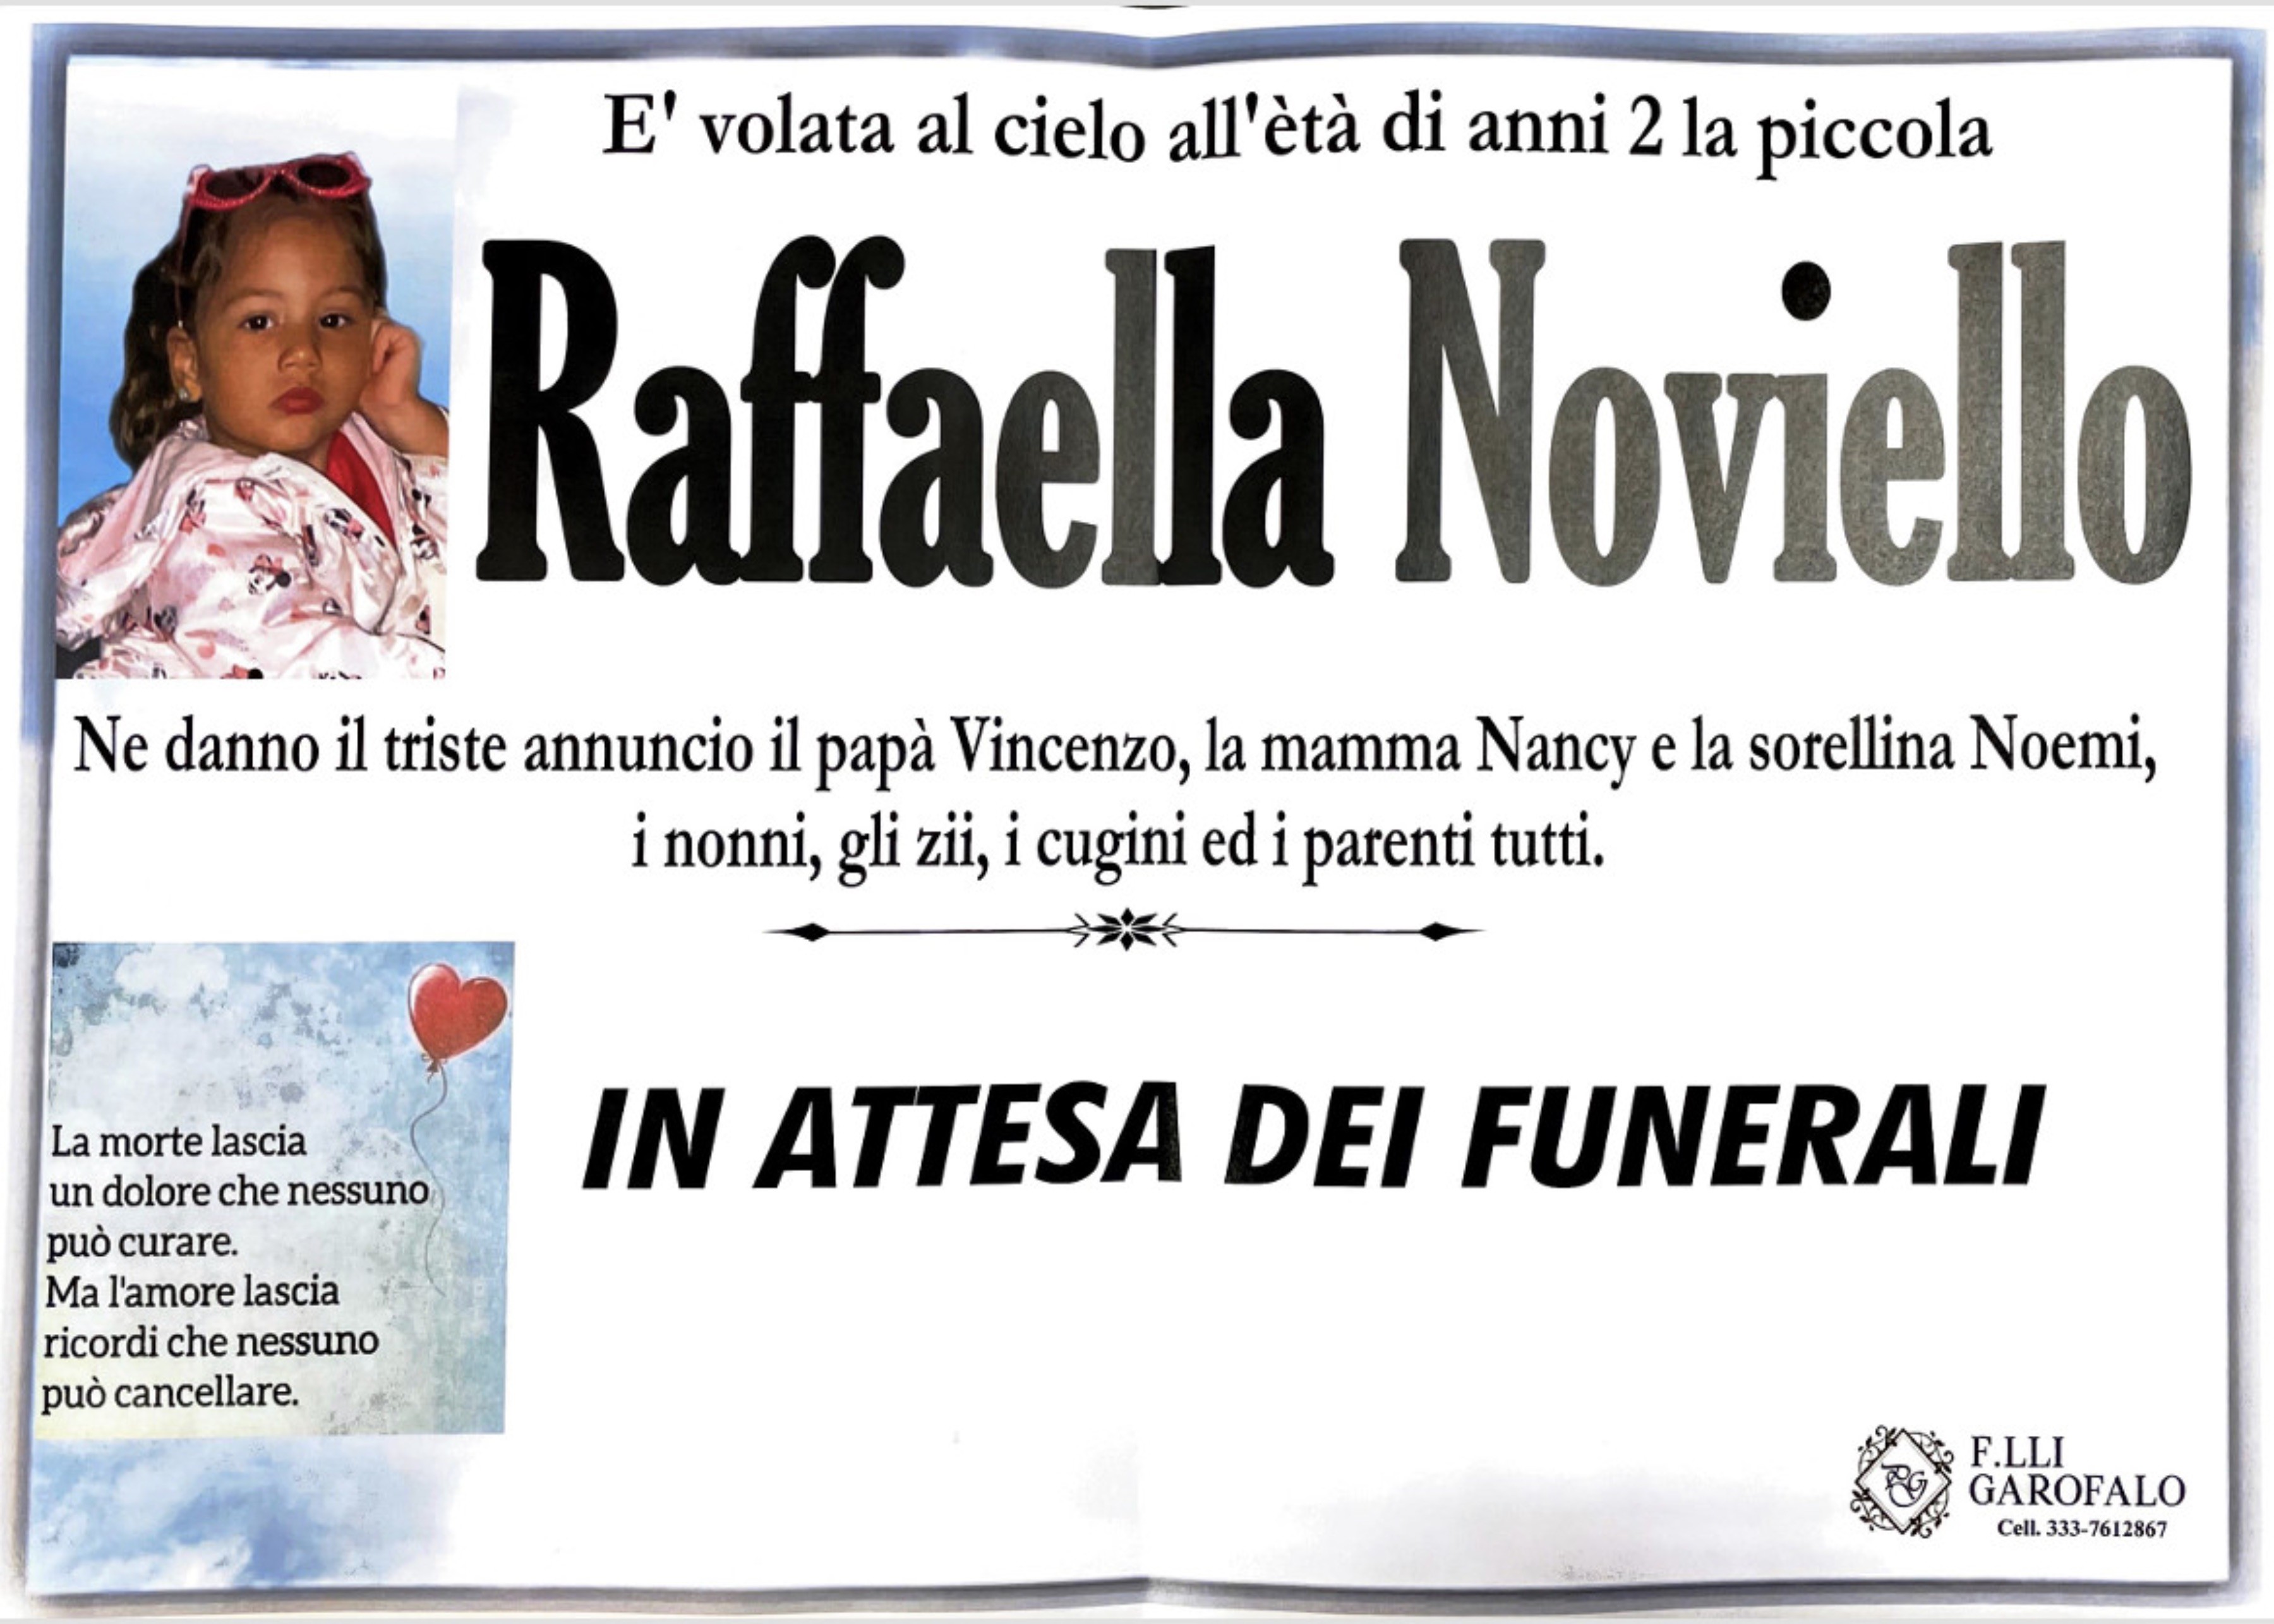 Raffaella Noviello